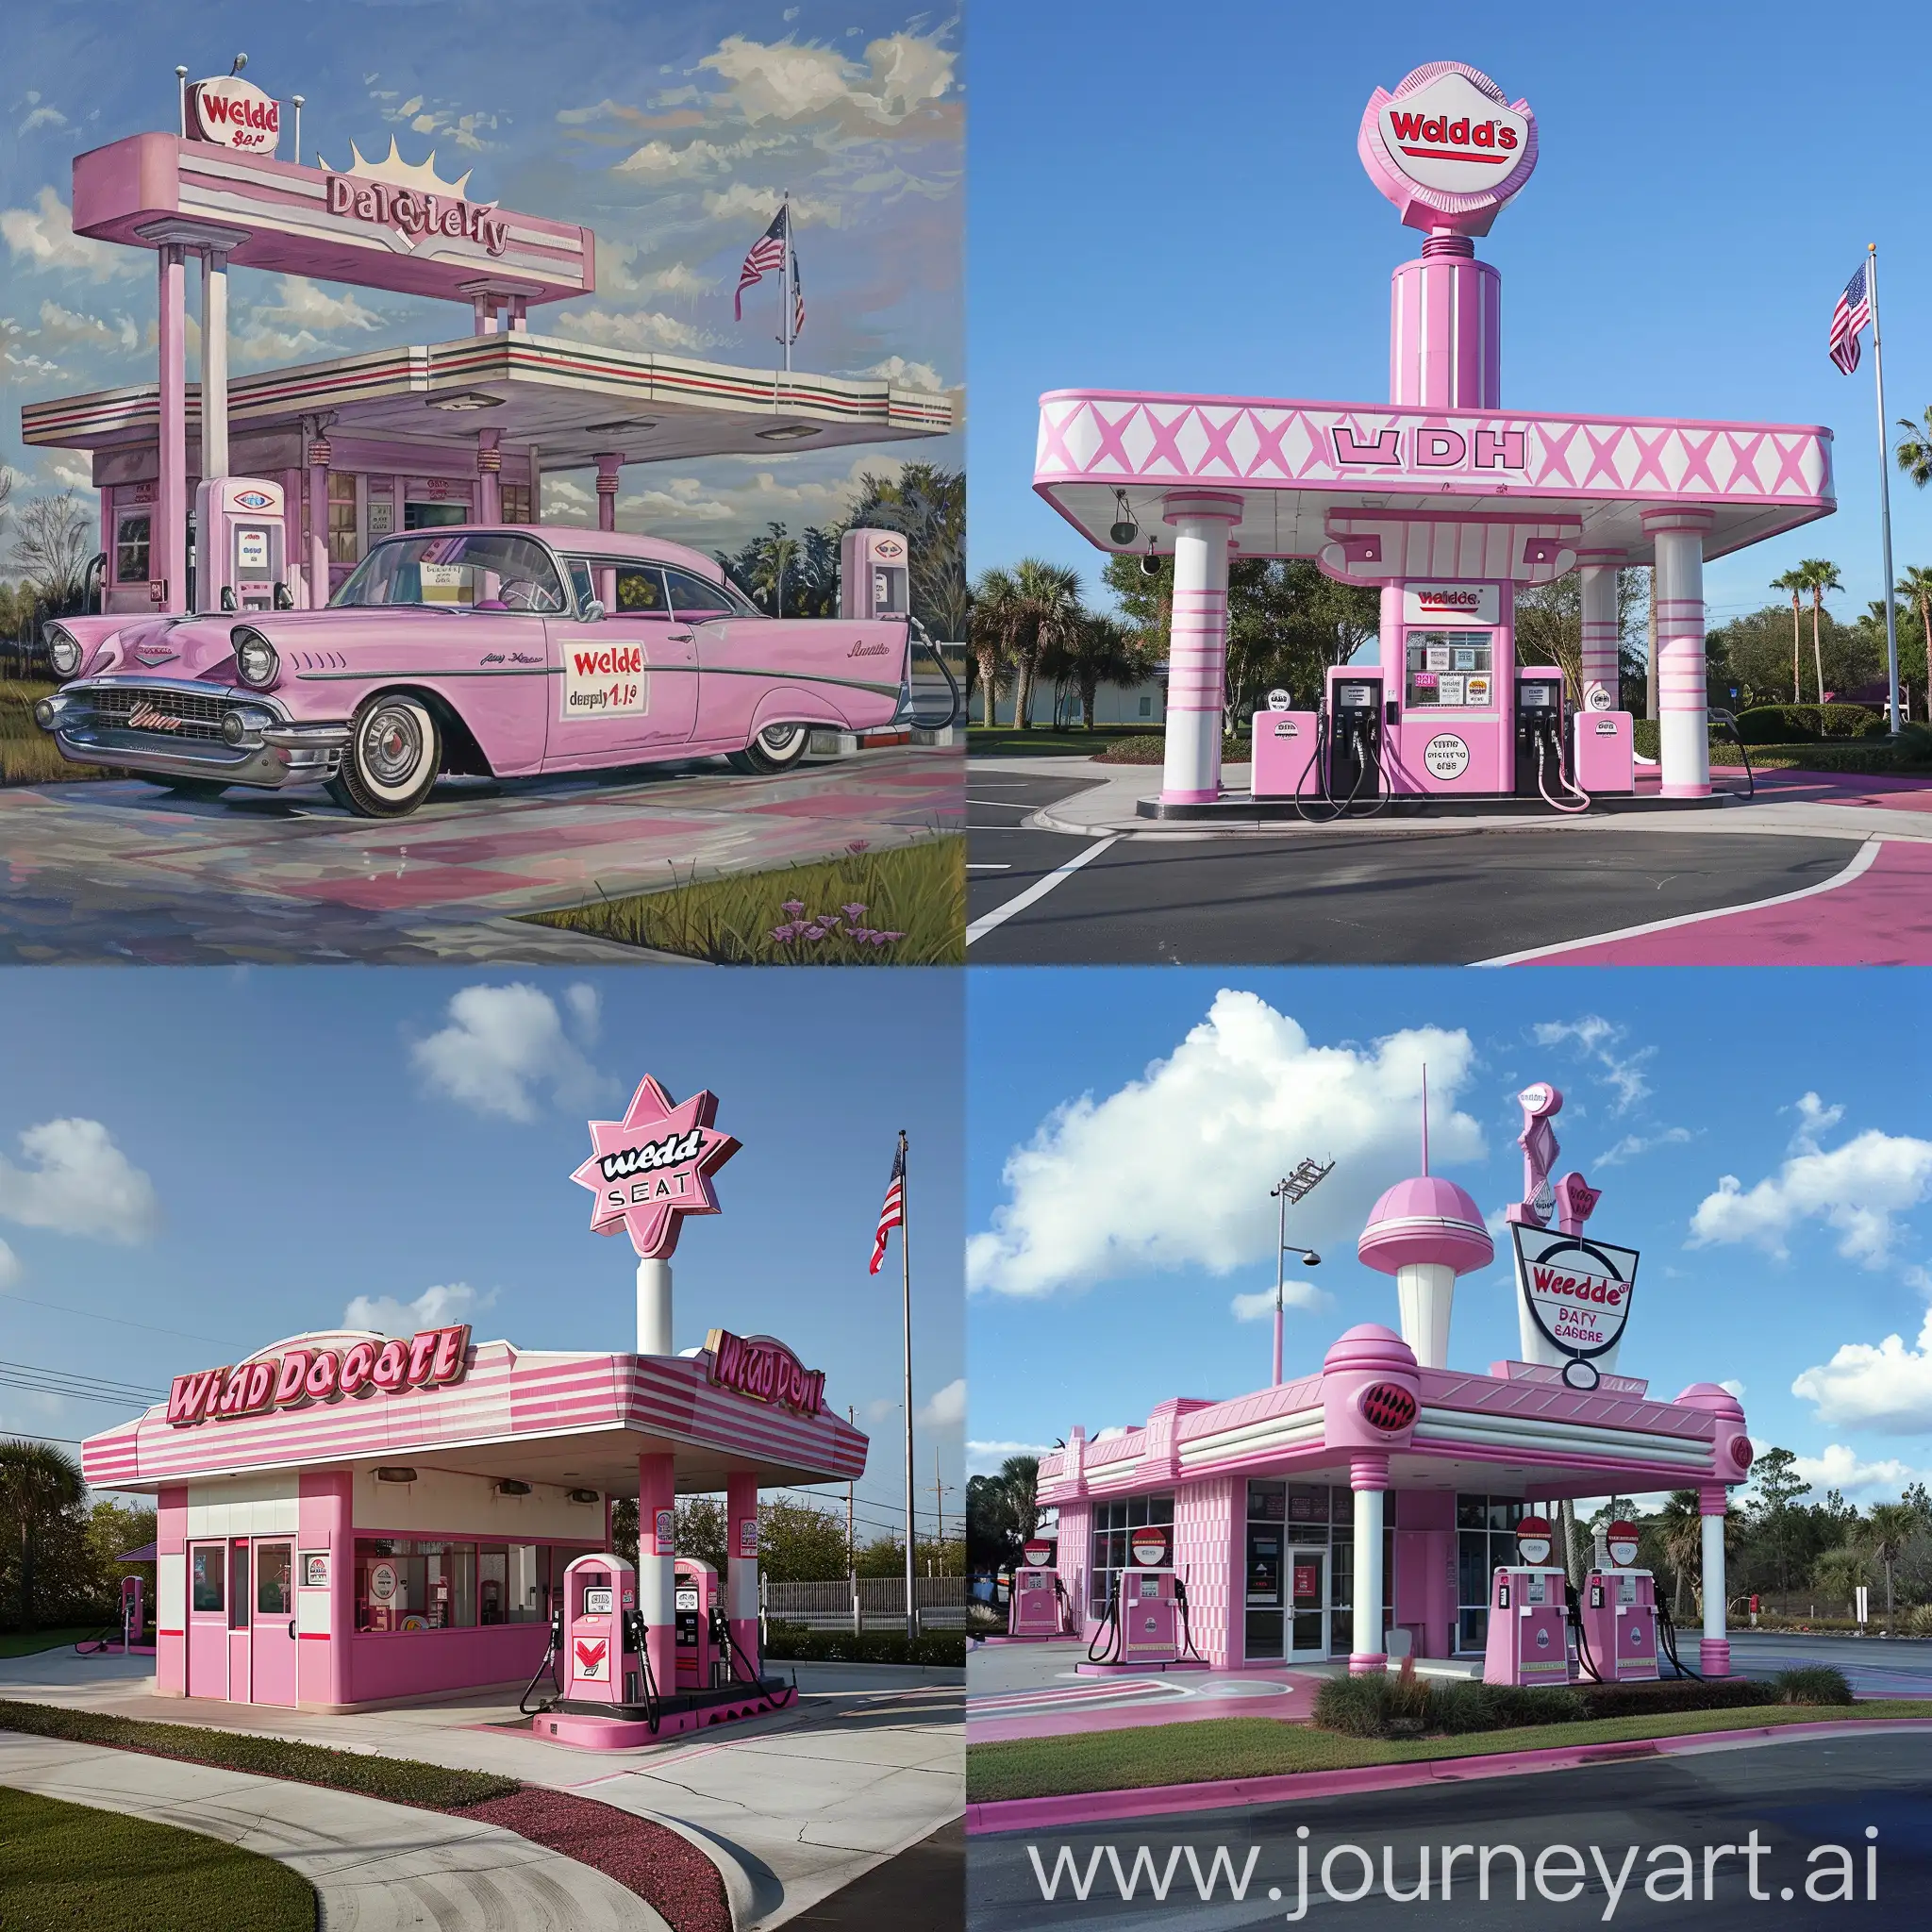 Vibrant-Pink-Gas-Station-Scene-in-Wendy-Daytona-Retro-Nostalgia-and-Modern-Convenience